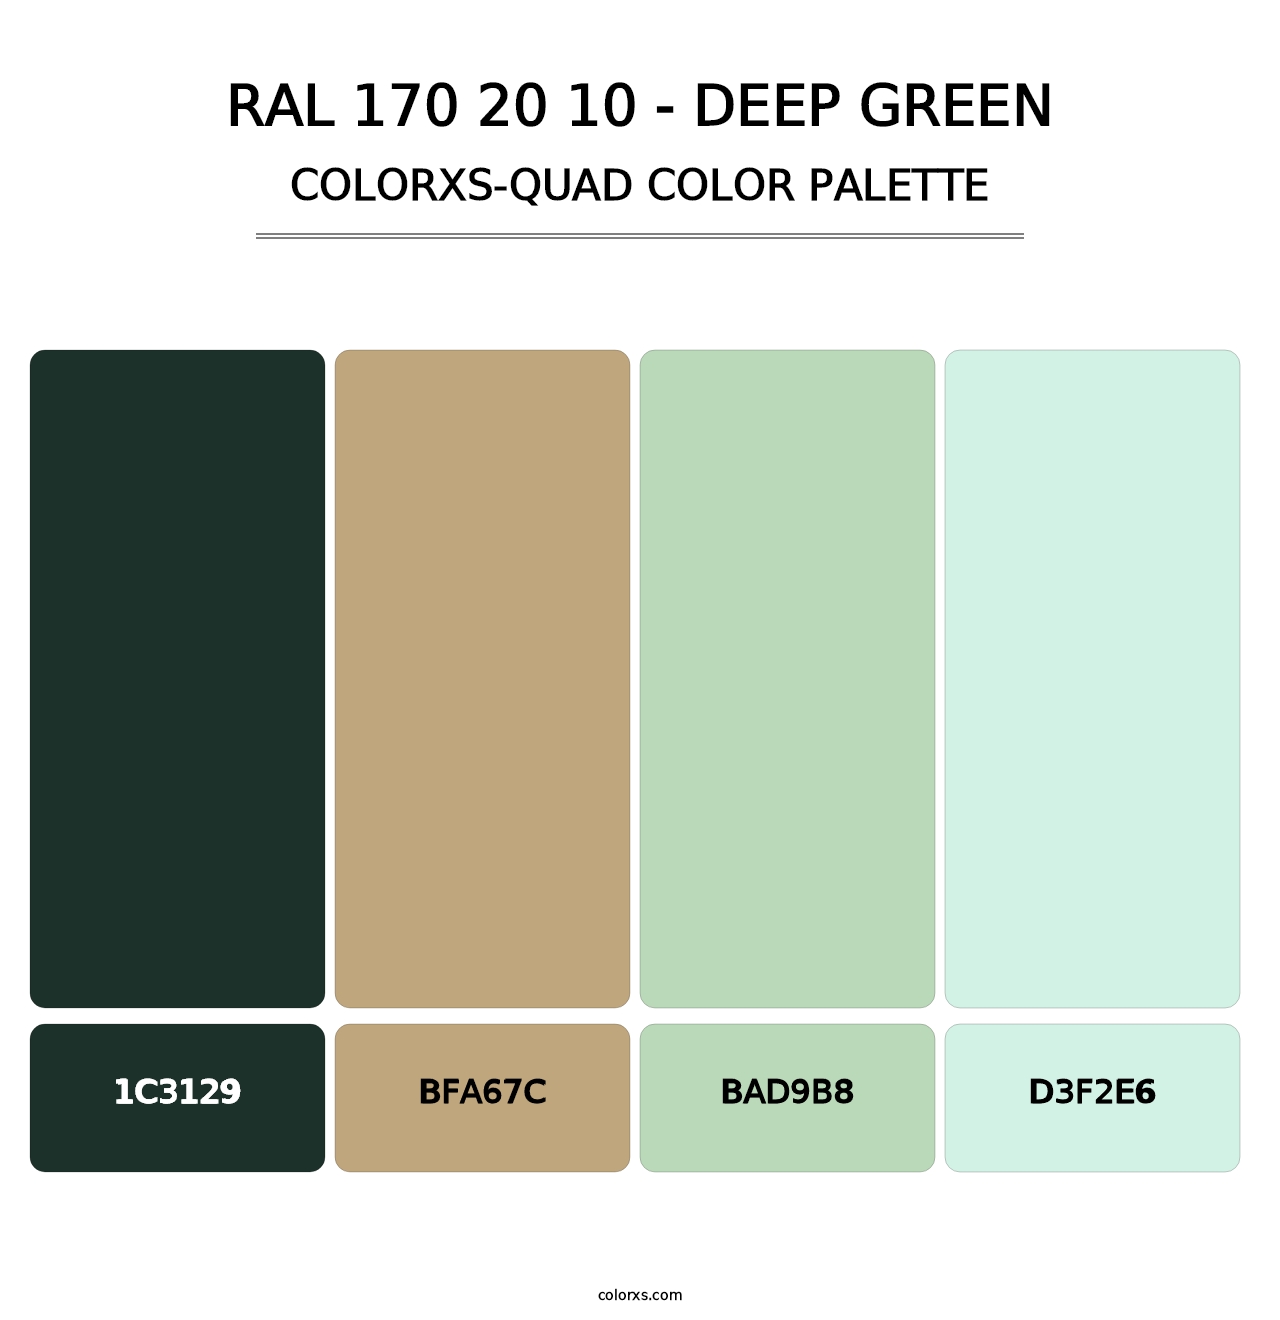 RAL 170 20 10 - Deep Green - Colorxs Quad Palette